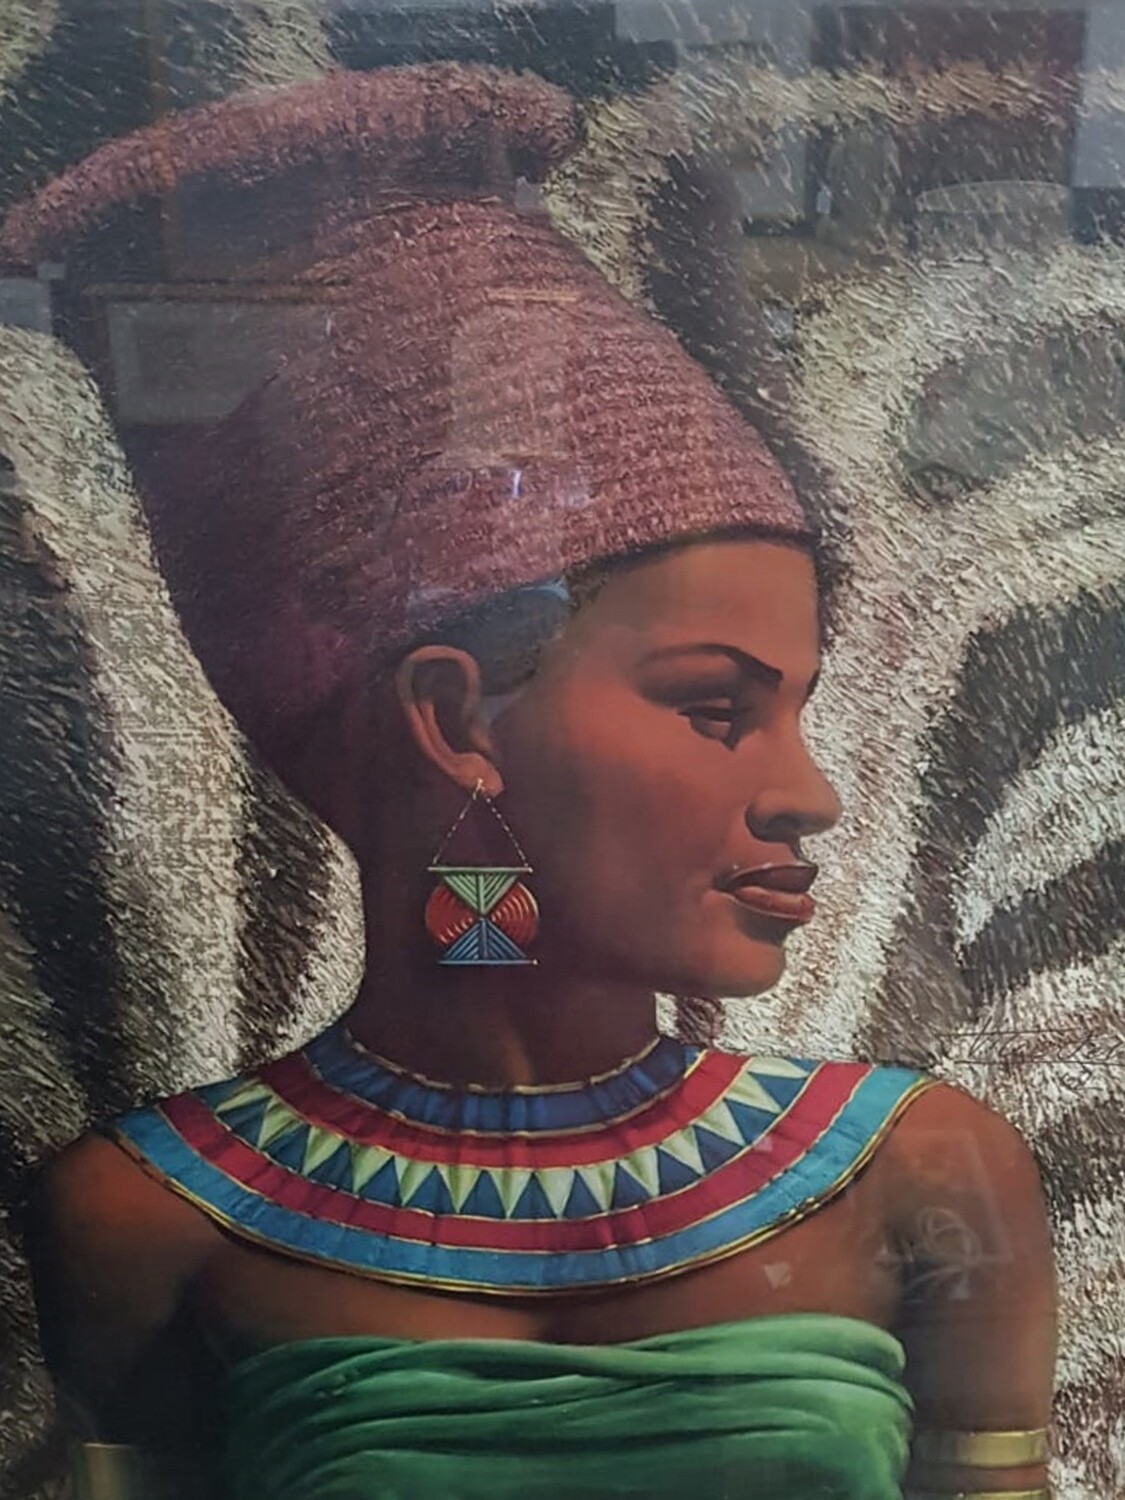 Framed Signed Print "Portrait of a Zulu Maiden" - 1957 - Vladimir Tretchikoff